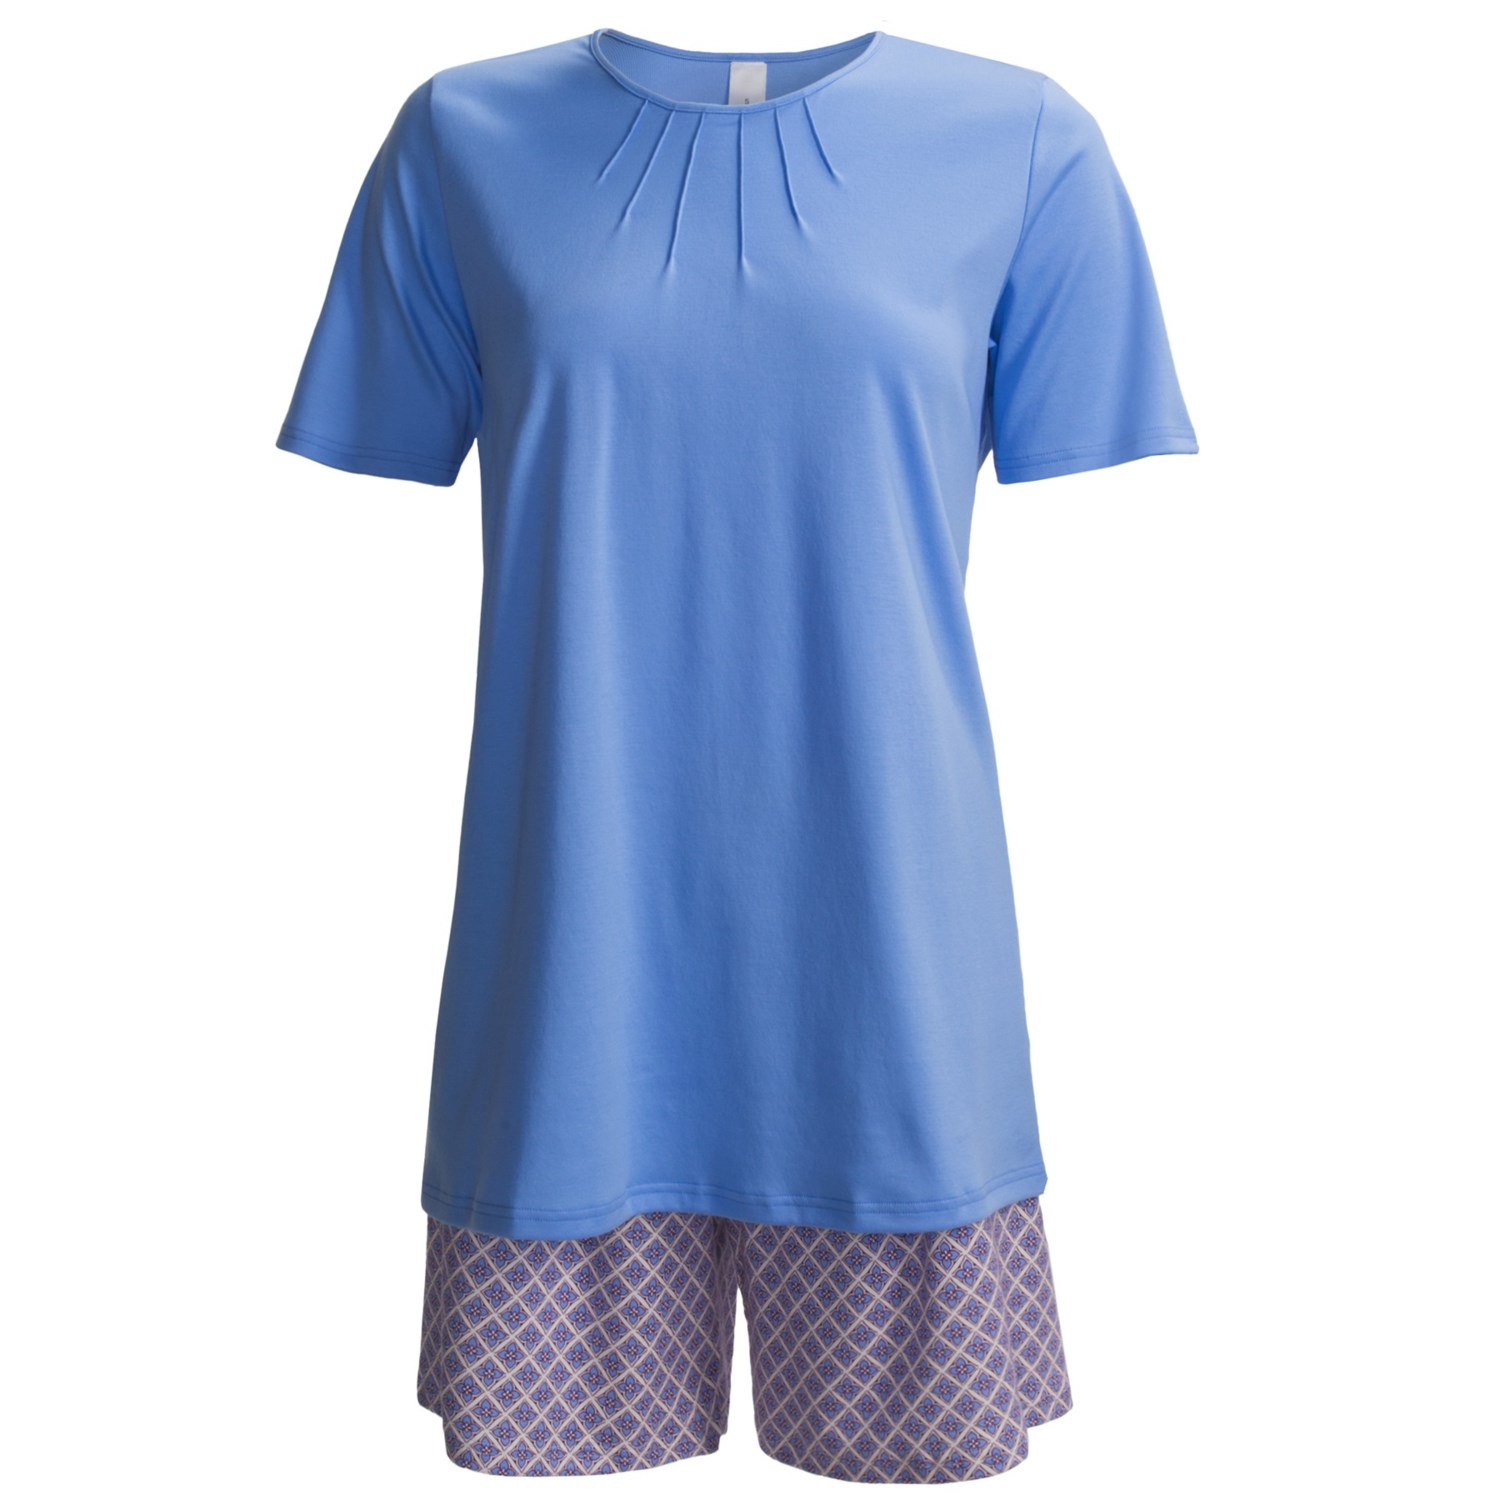 Calida Clover Field Short Pajamas (For Women) 8473D - Save 64%